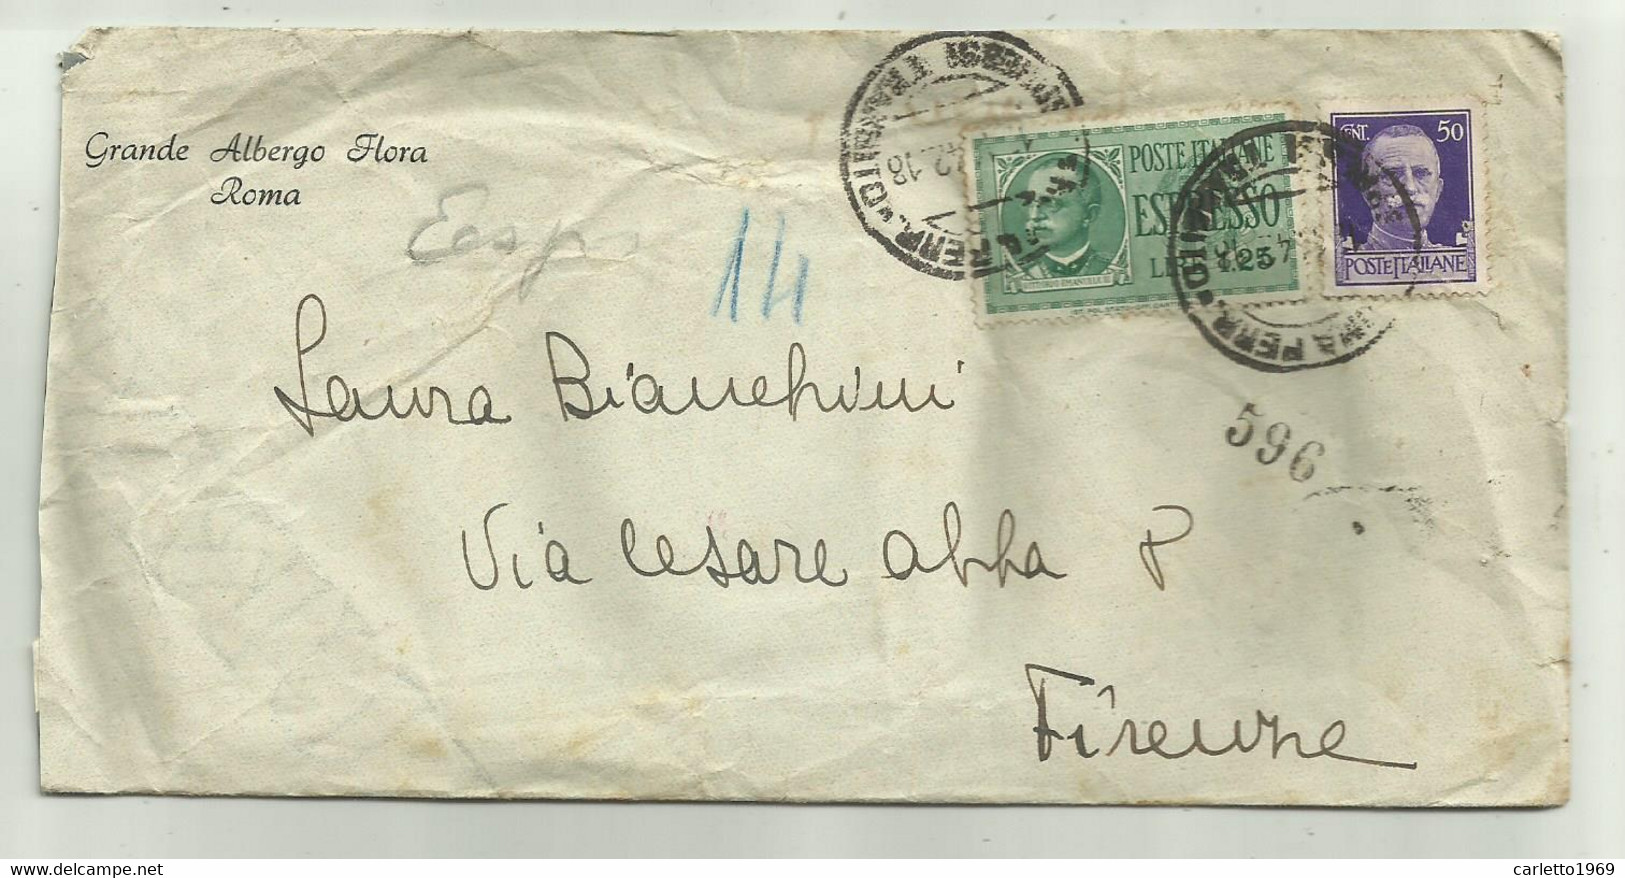 ESPRESSO LIRE 1,25 + CENT. 50 SU BUSTA GRANDE ALBERGO FLORA ROMA 1942 - Afgestempeld